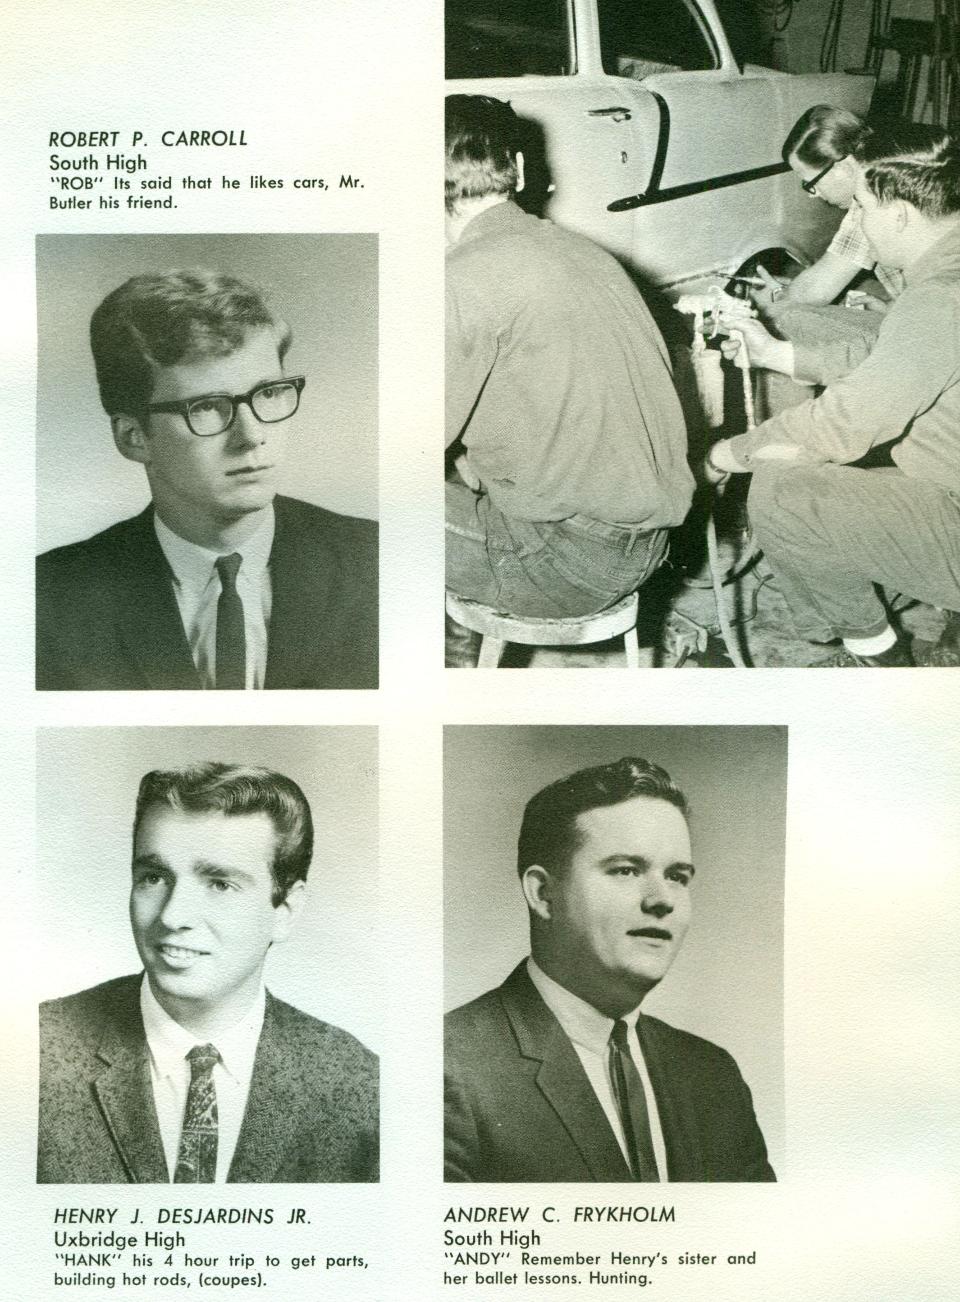 Worcester Industrial Technical Institute Class of 1967 Yearbook Auto Mechanics